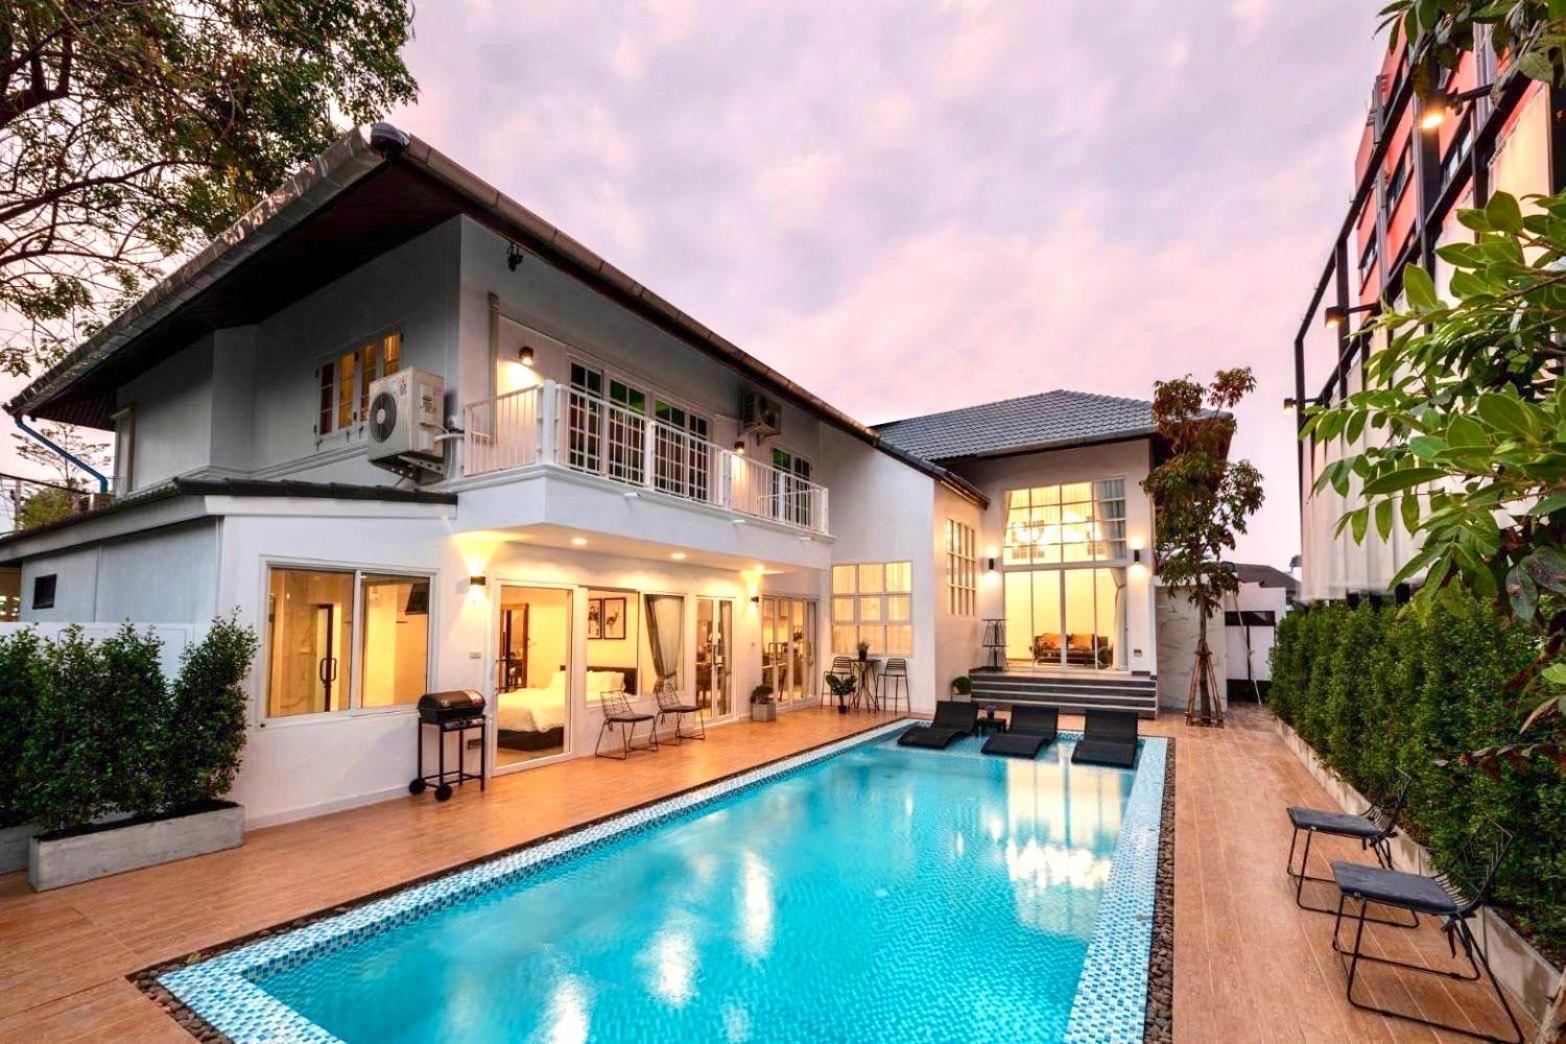 Nimman Villa 17 Chiangmai - Sha Plus Chiang Mai Exterior photo